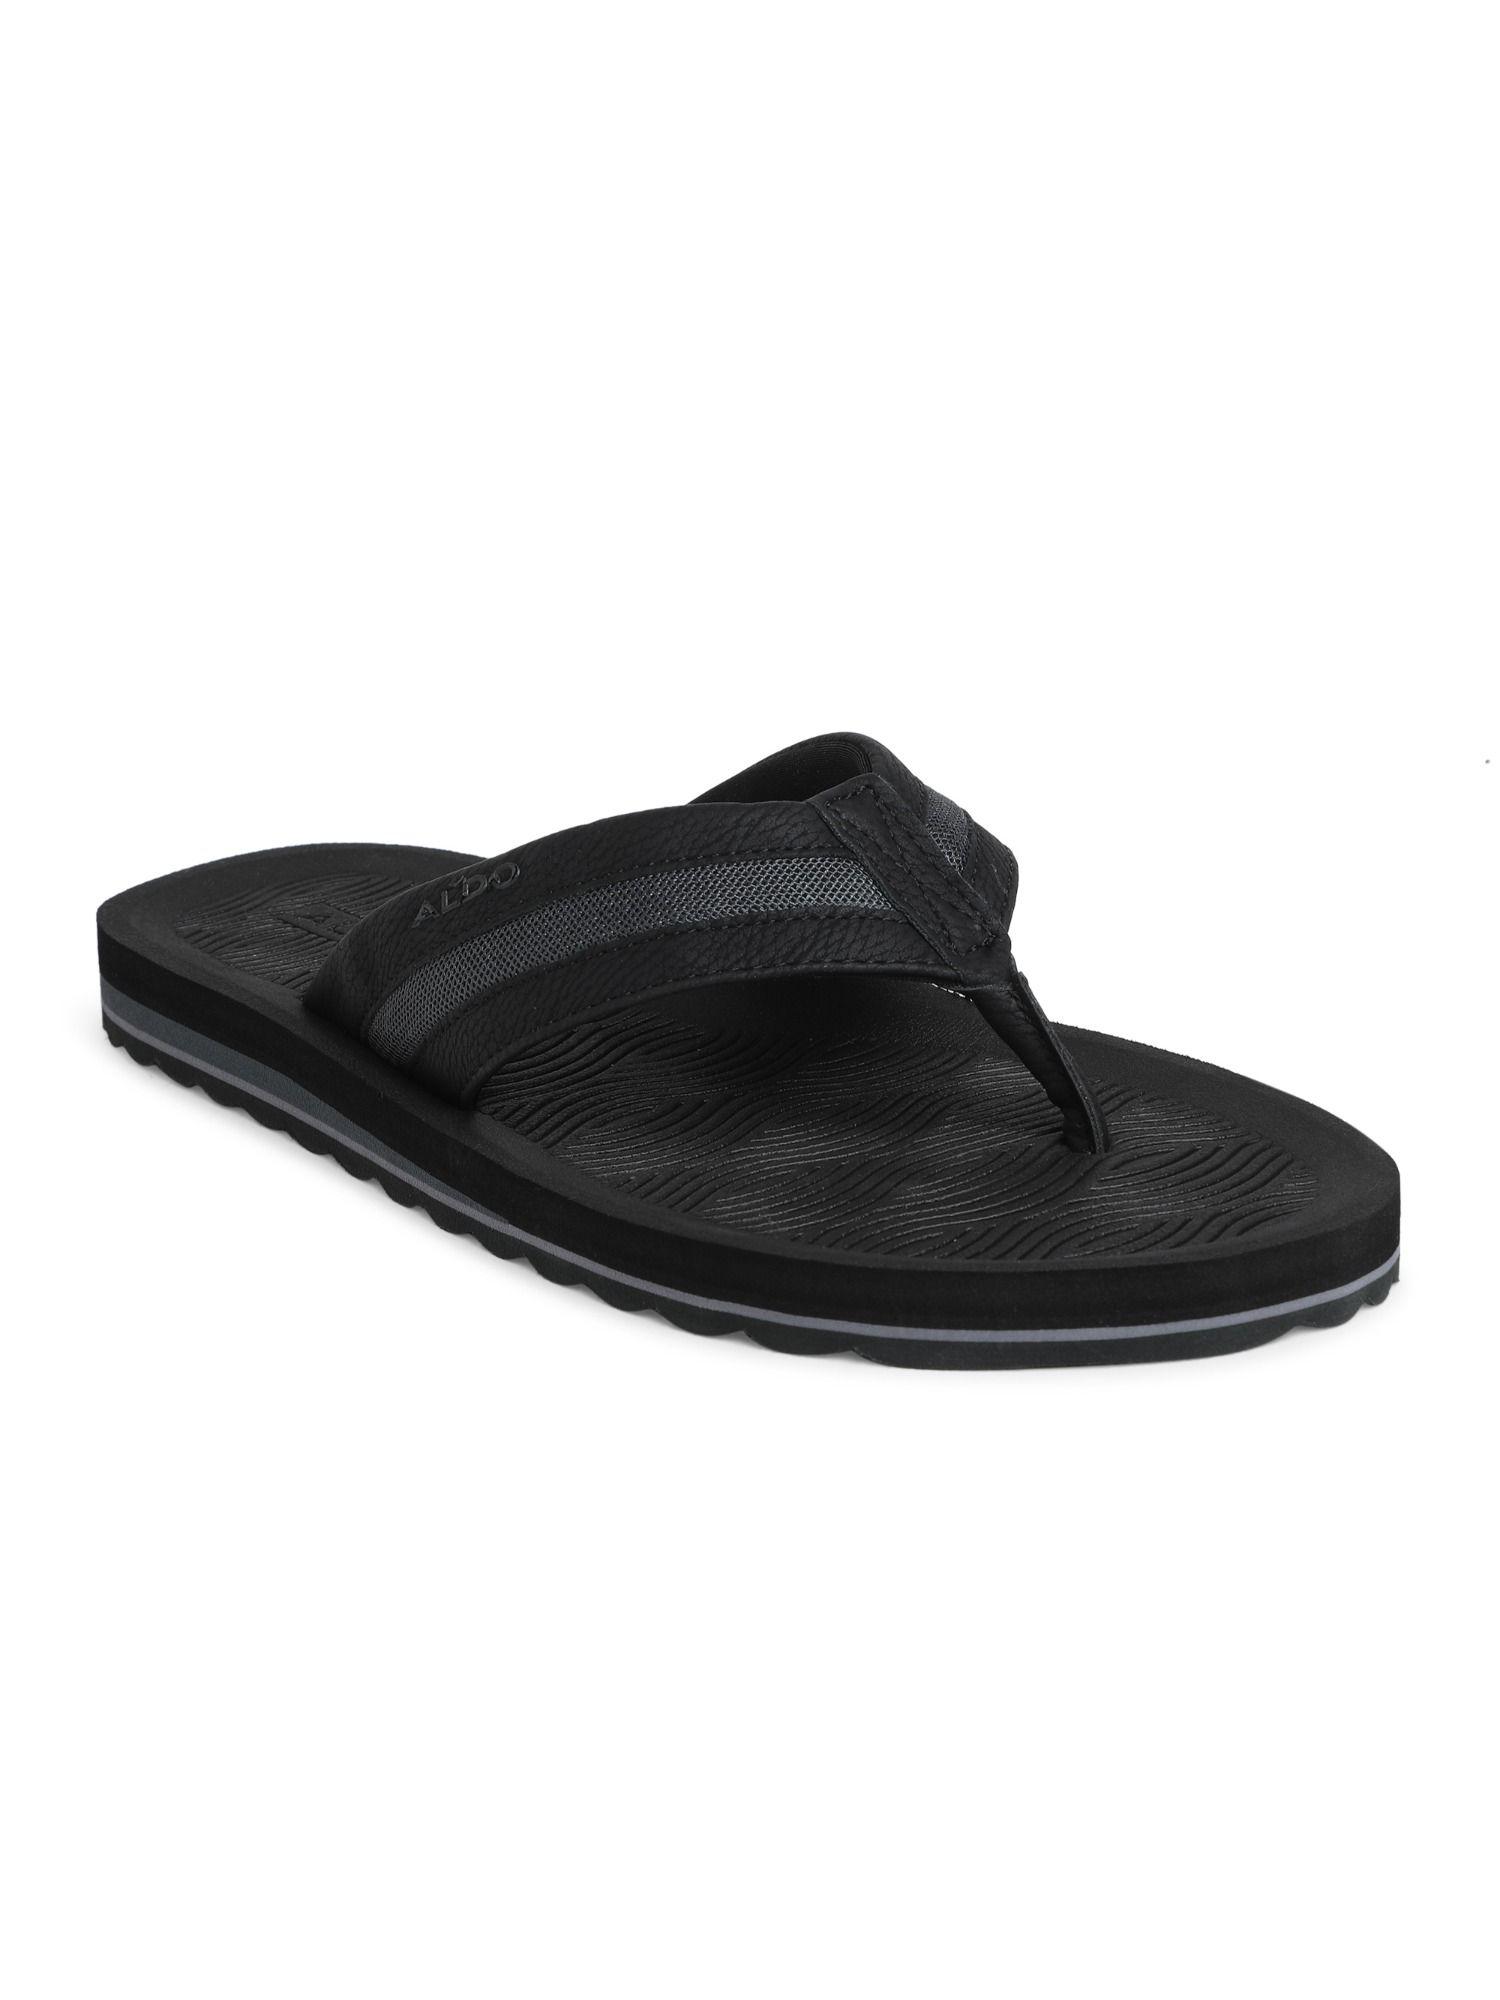 vovchenko synthetic black solid sandals